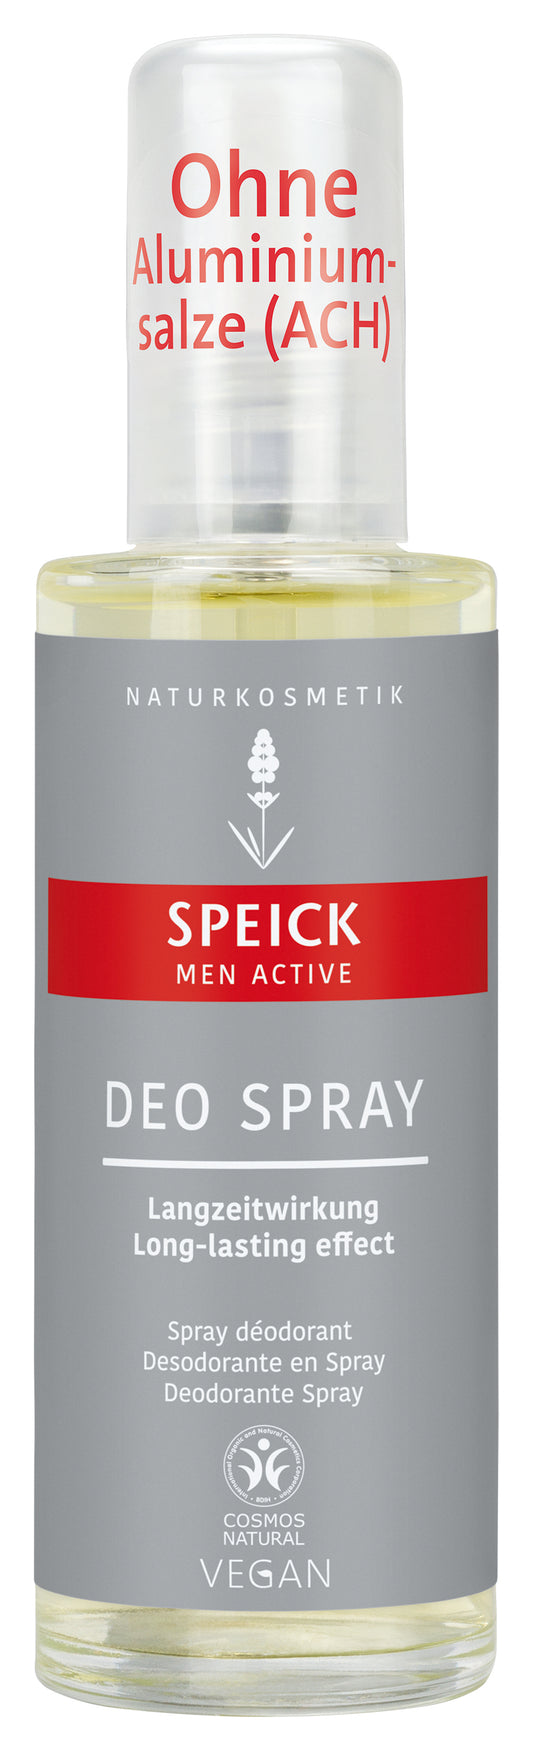 Speick Men Active Deo Spray (75ml)